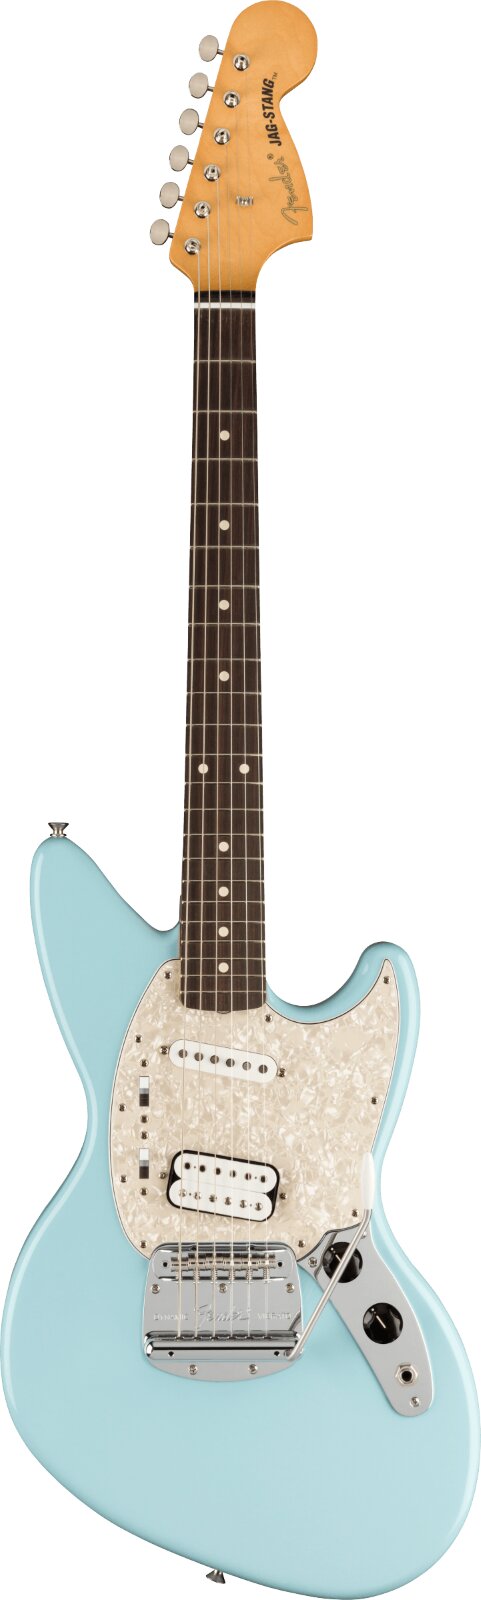 Fender Kurt Cobain Jag-Stang, Rosewood Fingerboard, Sonic Blue : photo 1